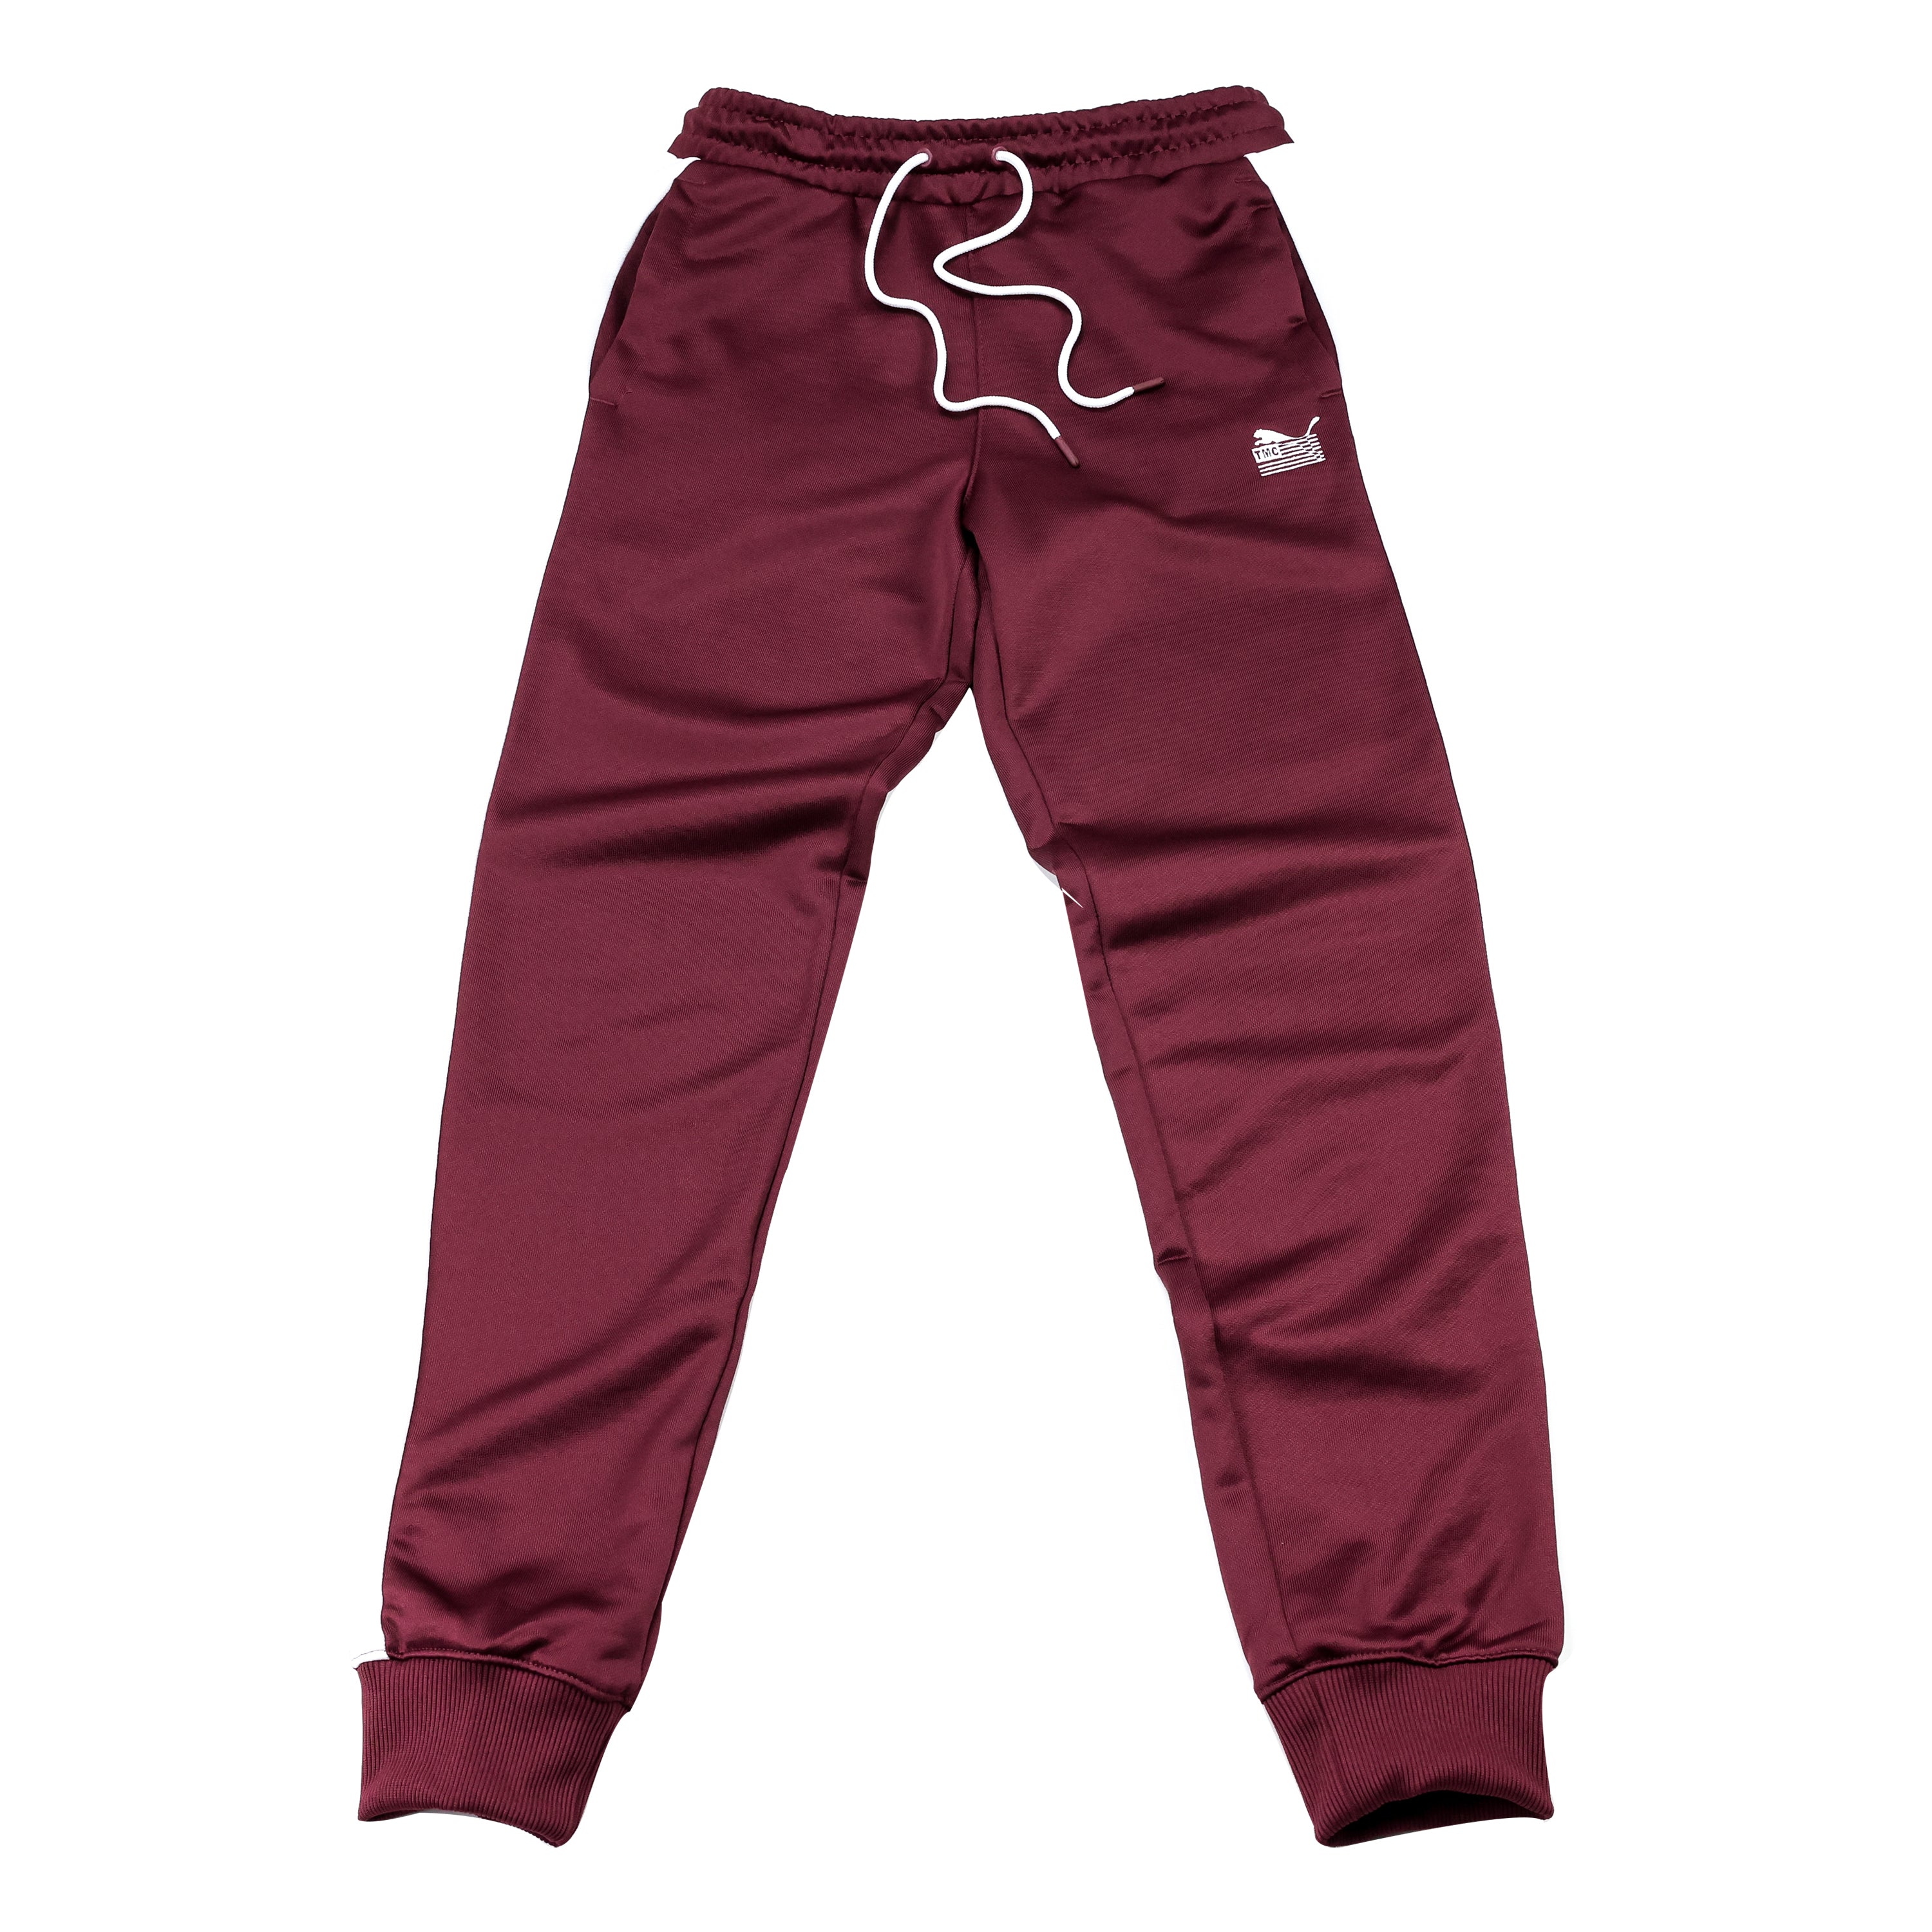 Vs Maroon sweatpants with logo